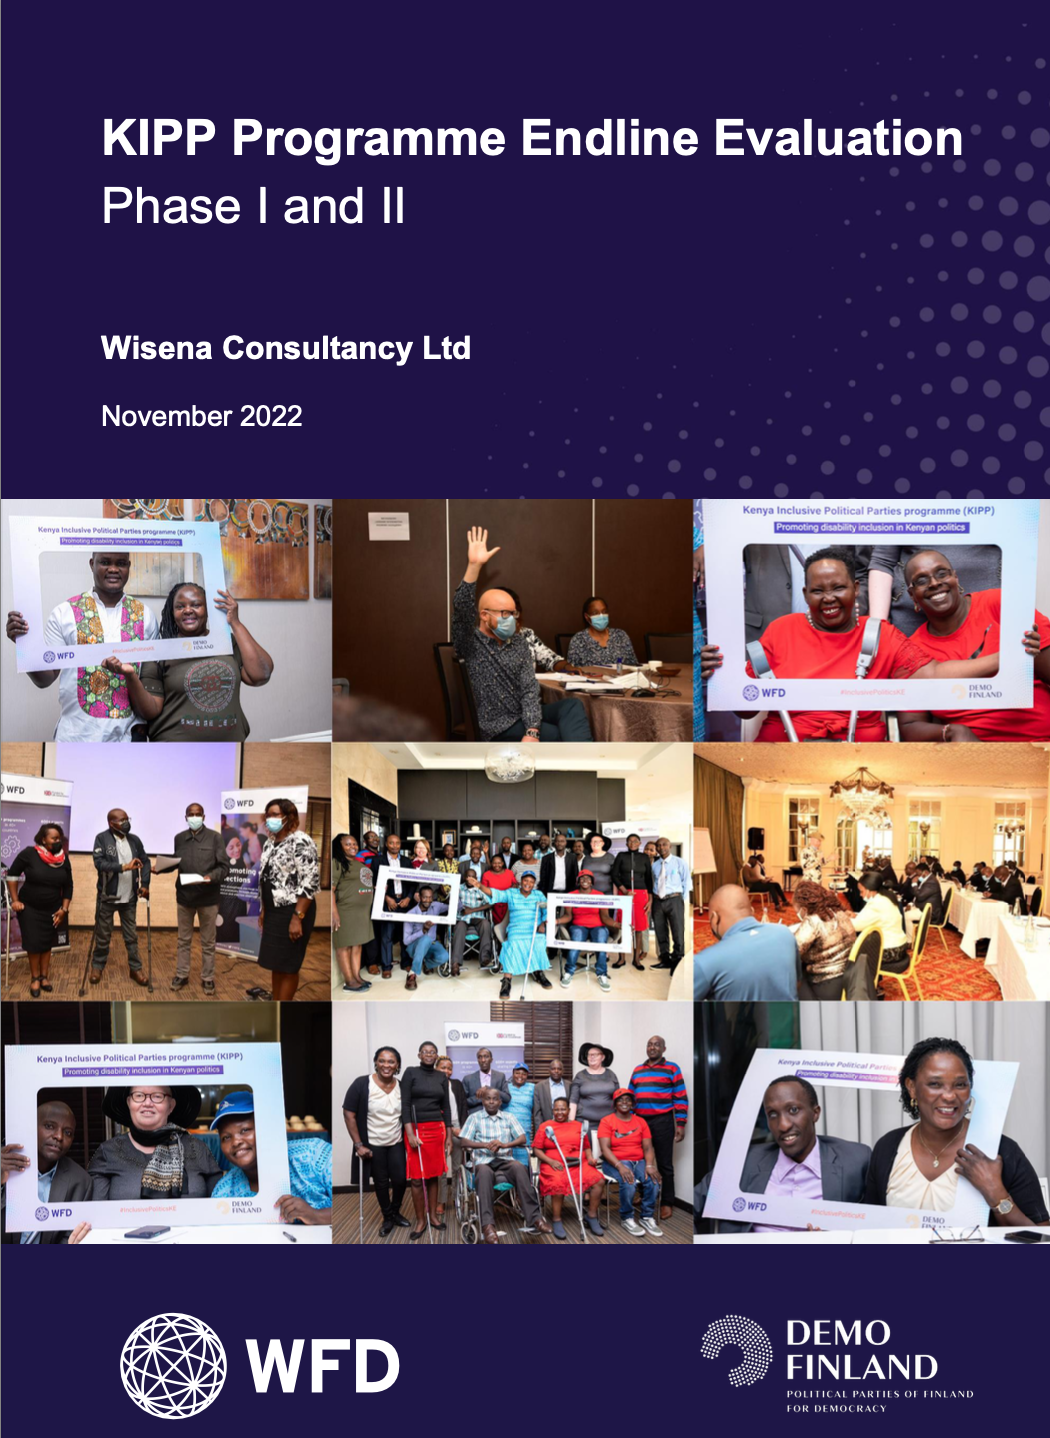 Endline evaluation of the Kenya Inclusive Political Parties (KIPP) programme